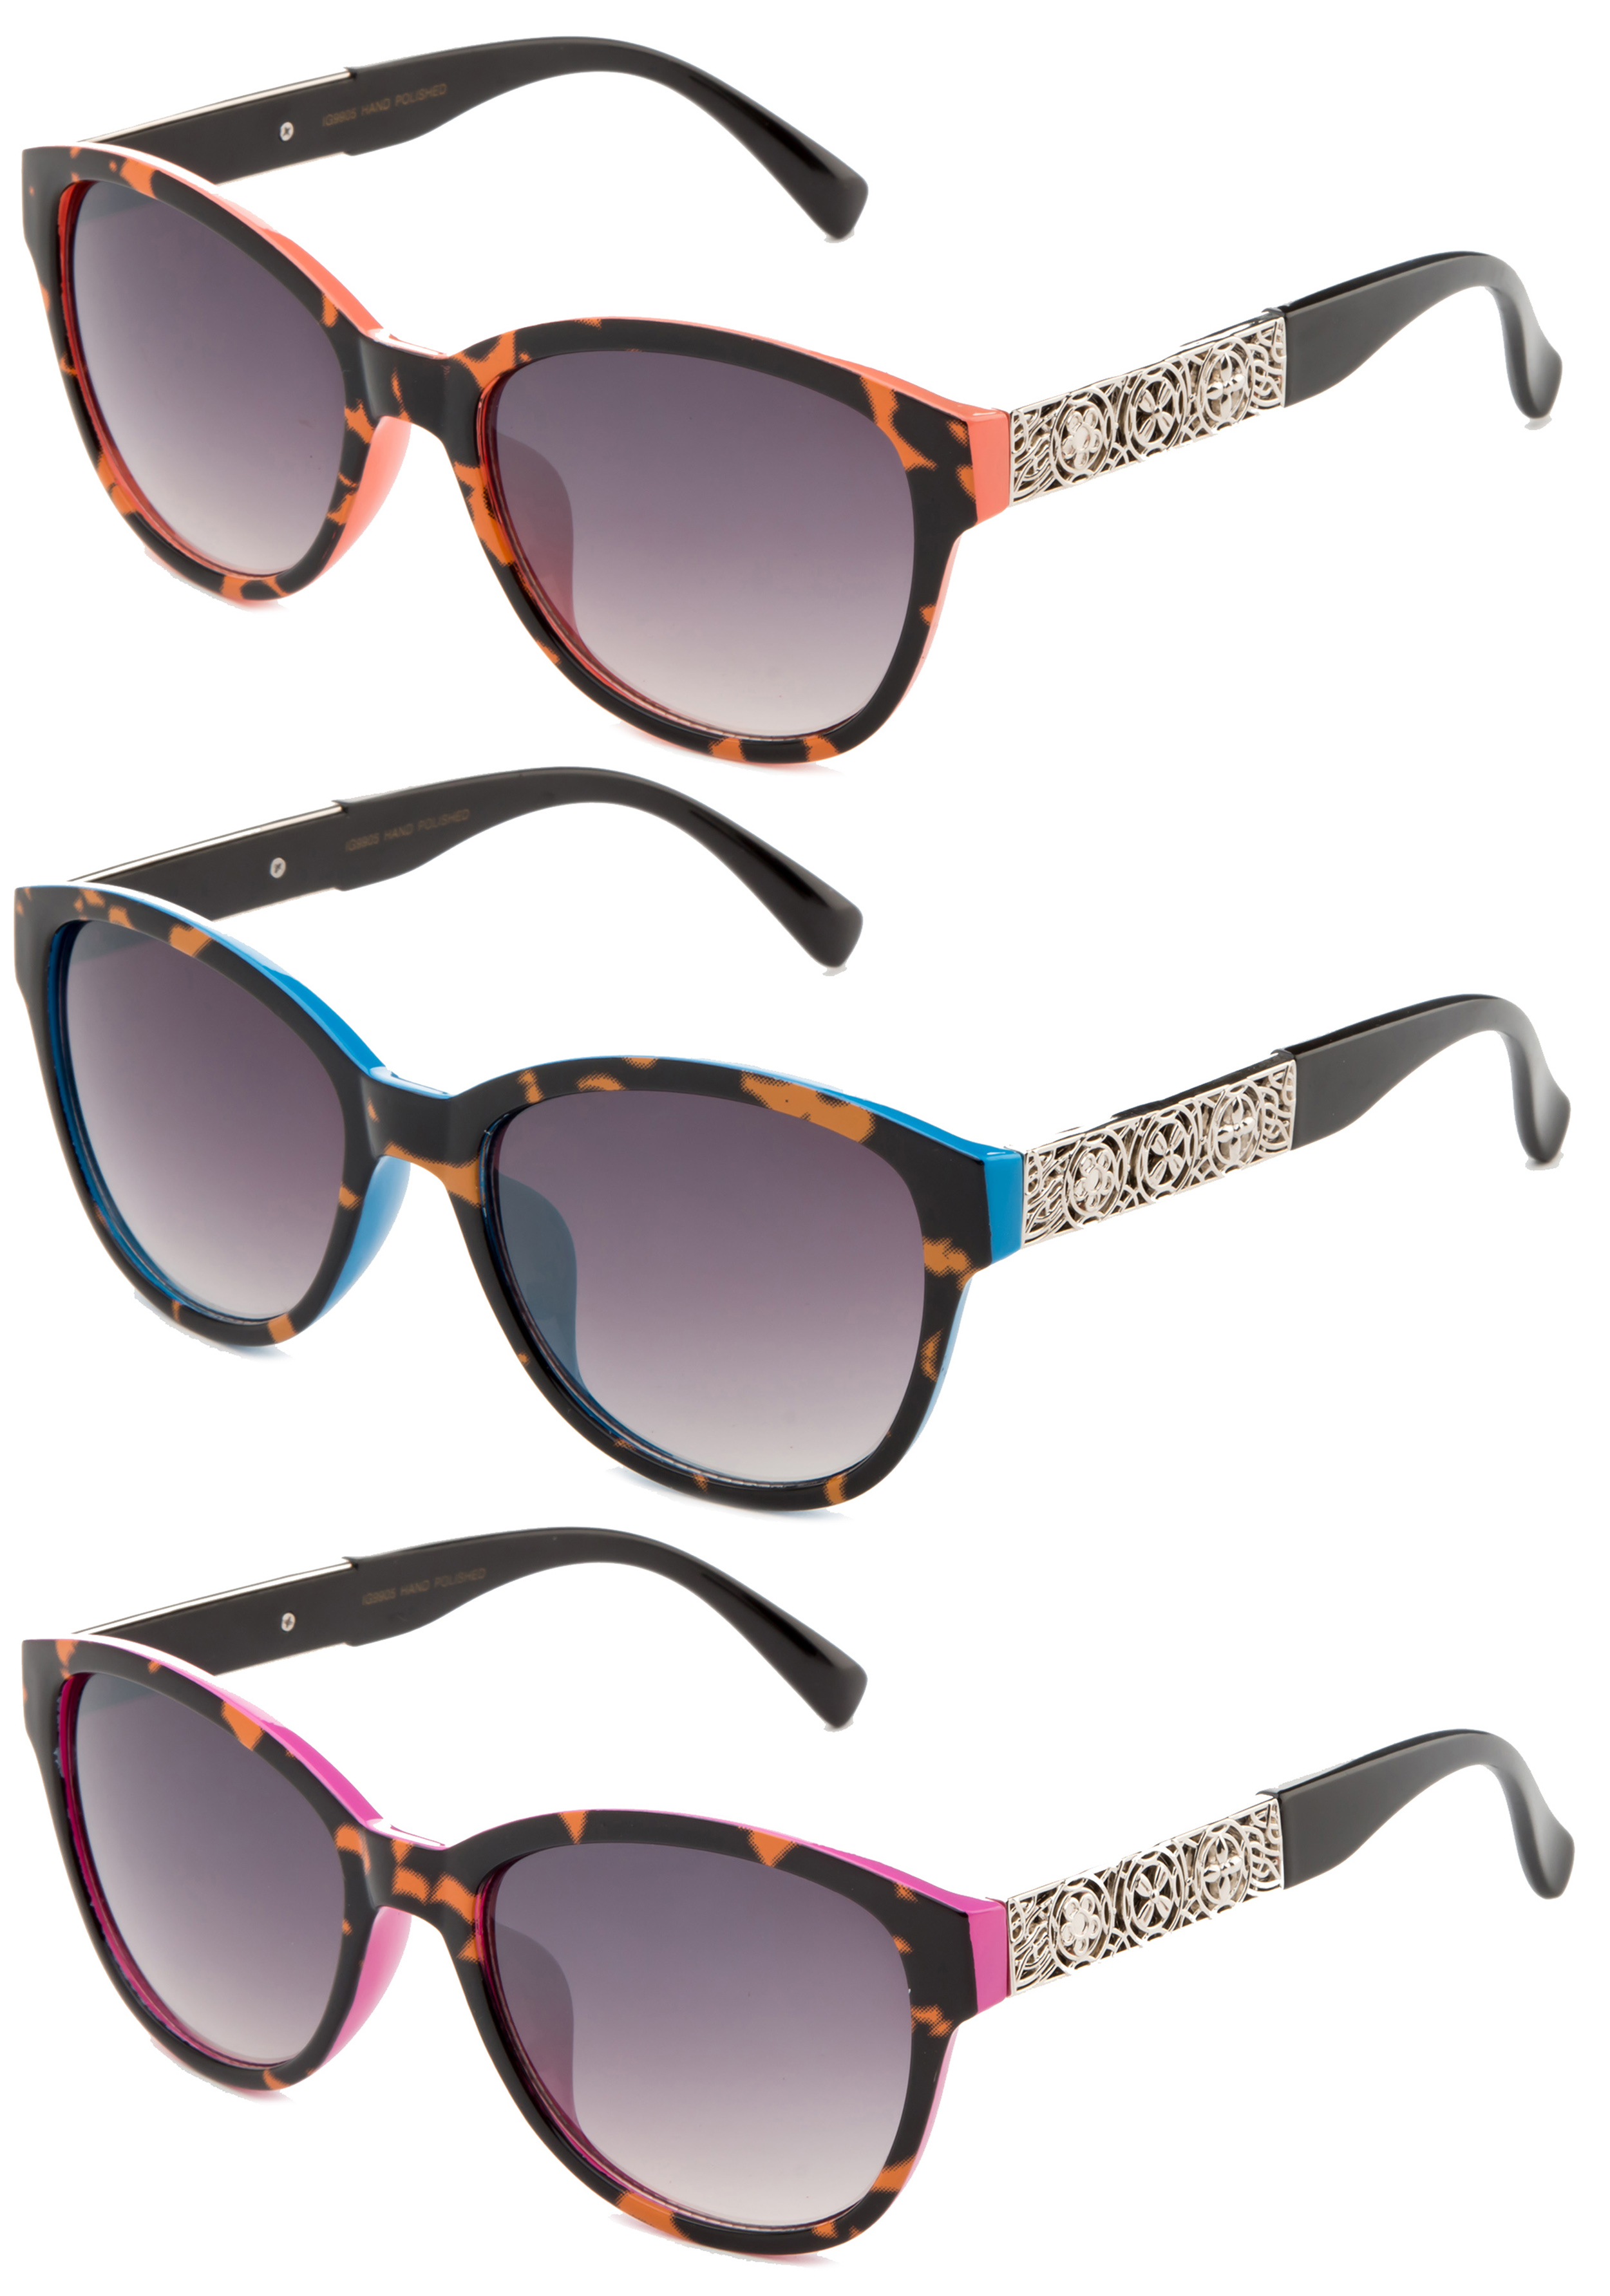 3 Pairs Unique Cateye Design with UV400 Gradient Lenses Fashion Sunglasses for Women - image 1 of 1